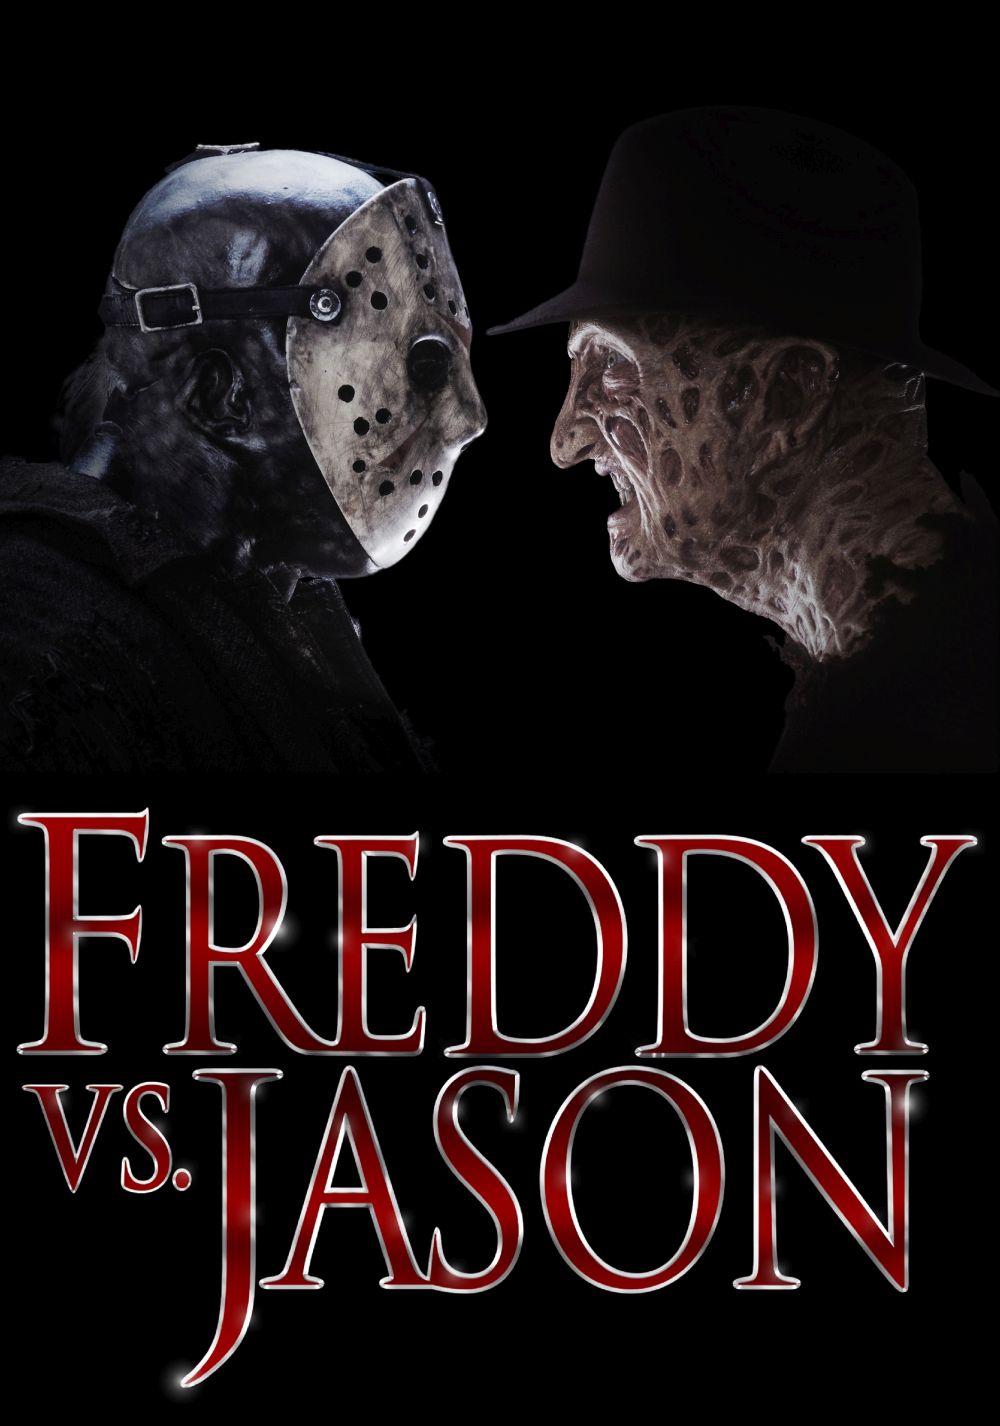 Freddy Vs Jason wallpaper by RafikiYako  Download on ZEDGE  2bf2